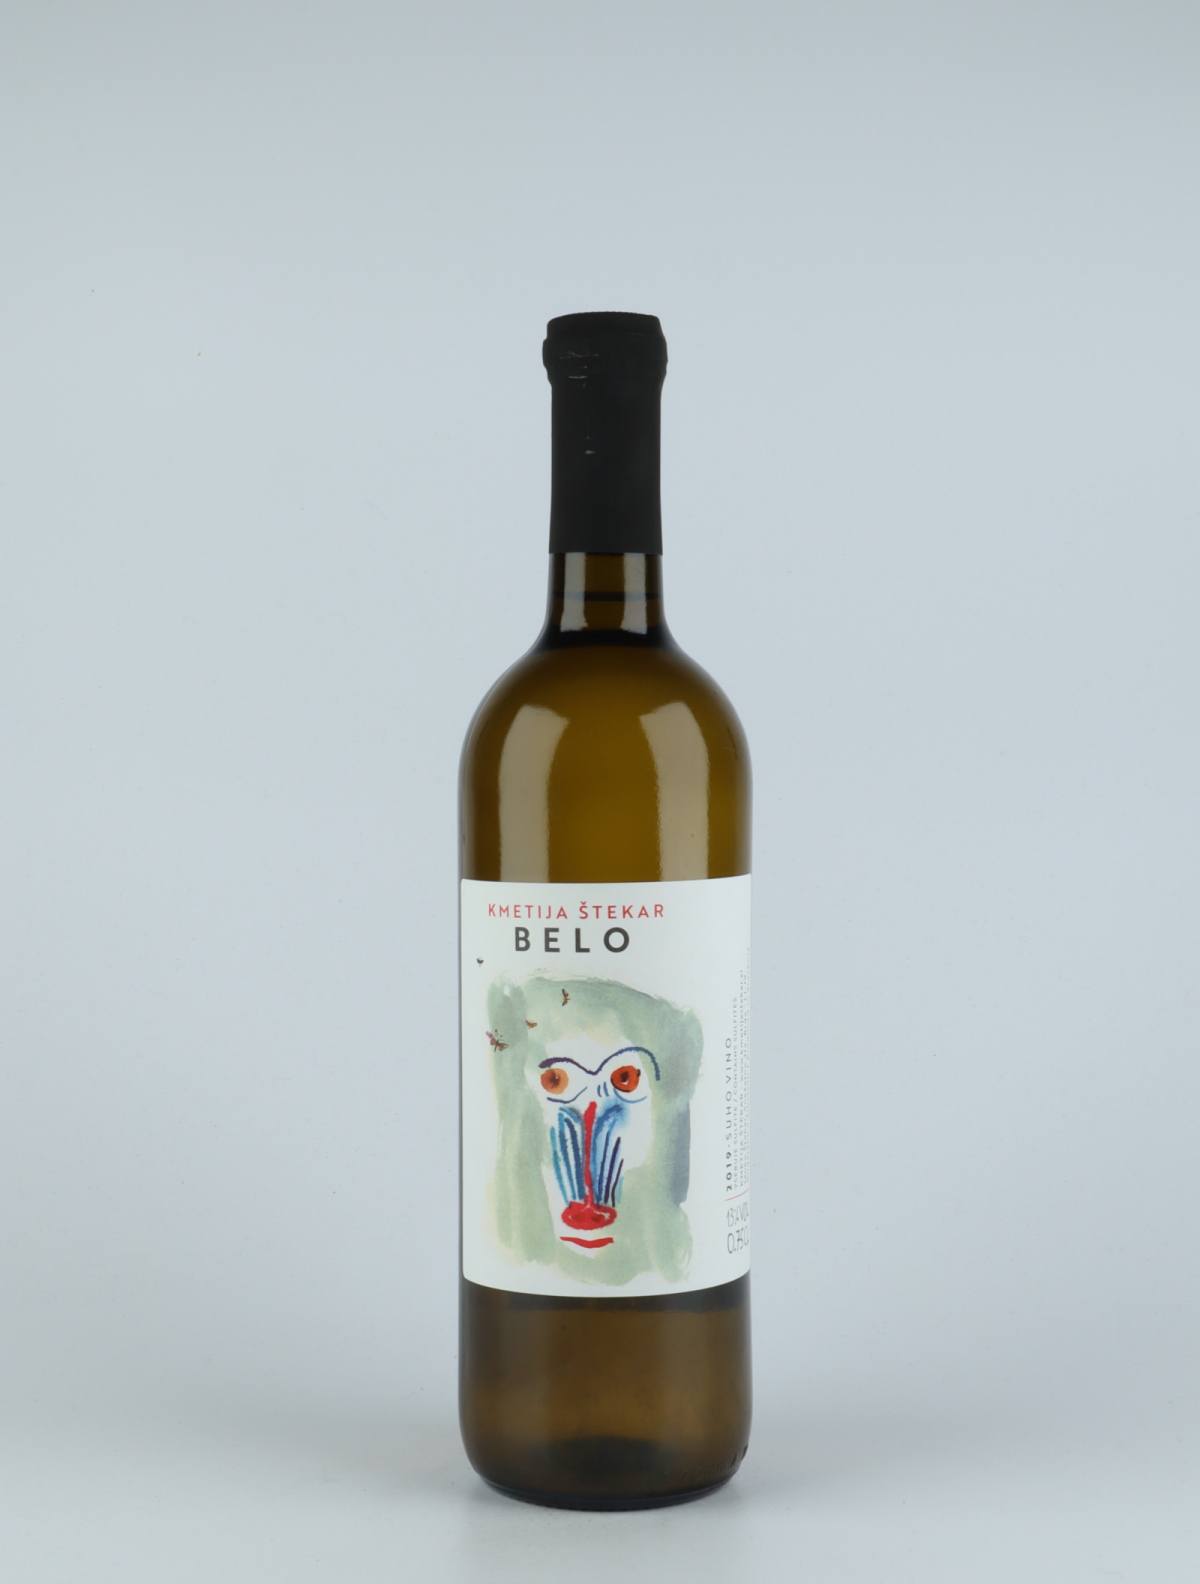 En flaske Belo Hvidvin fra Kmetija Stekar, Brda i Slovenien